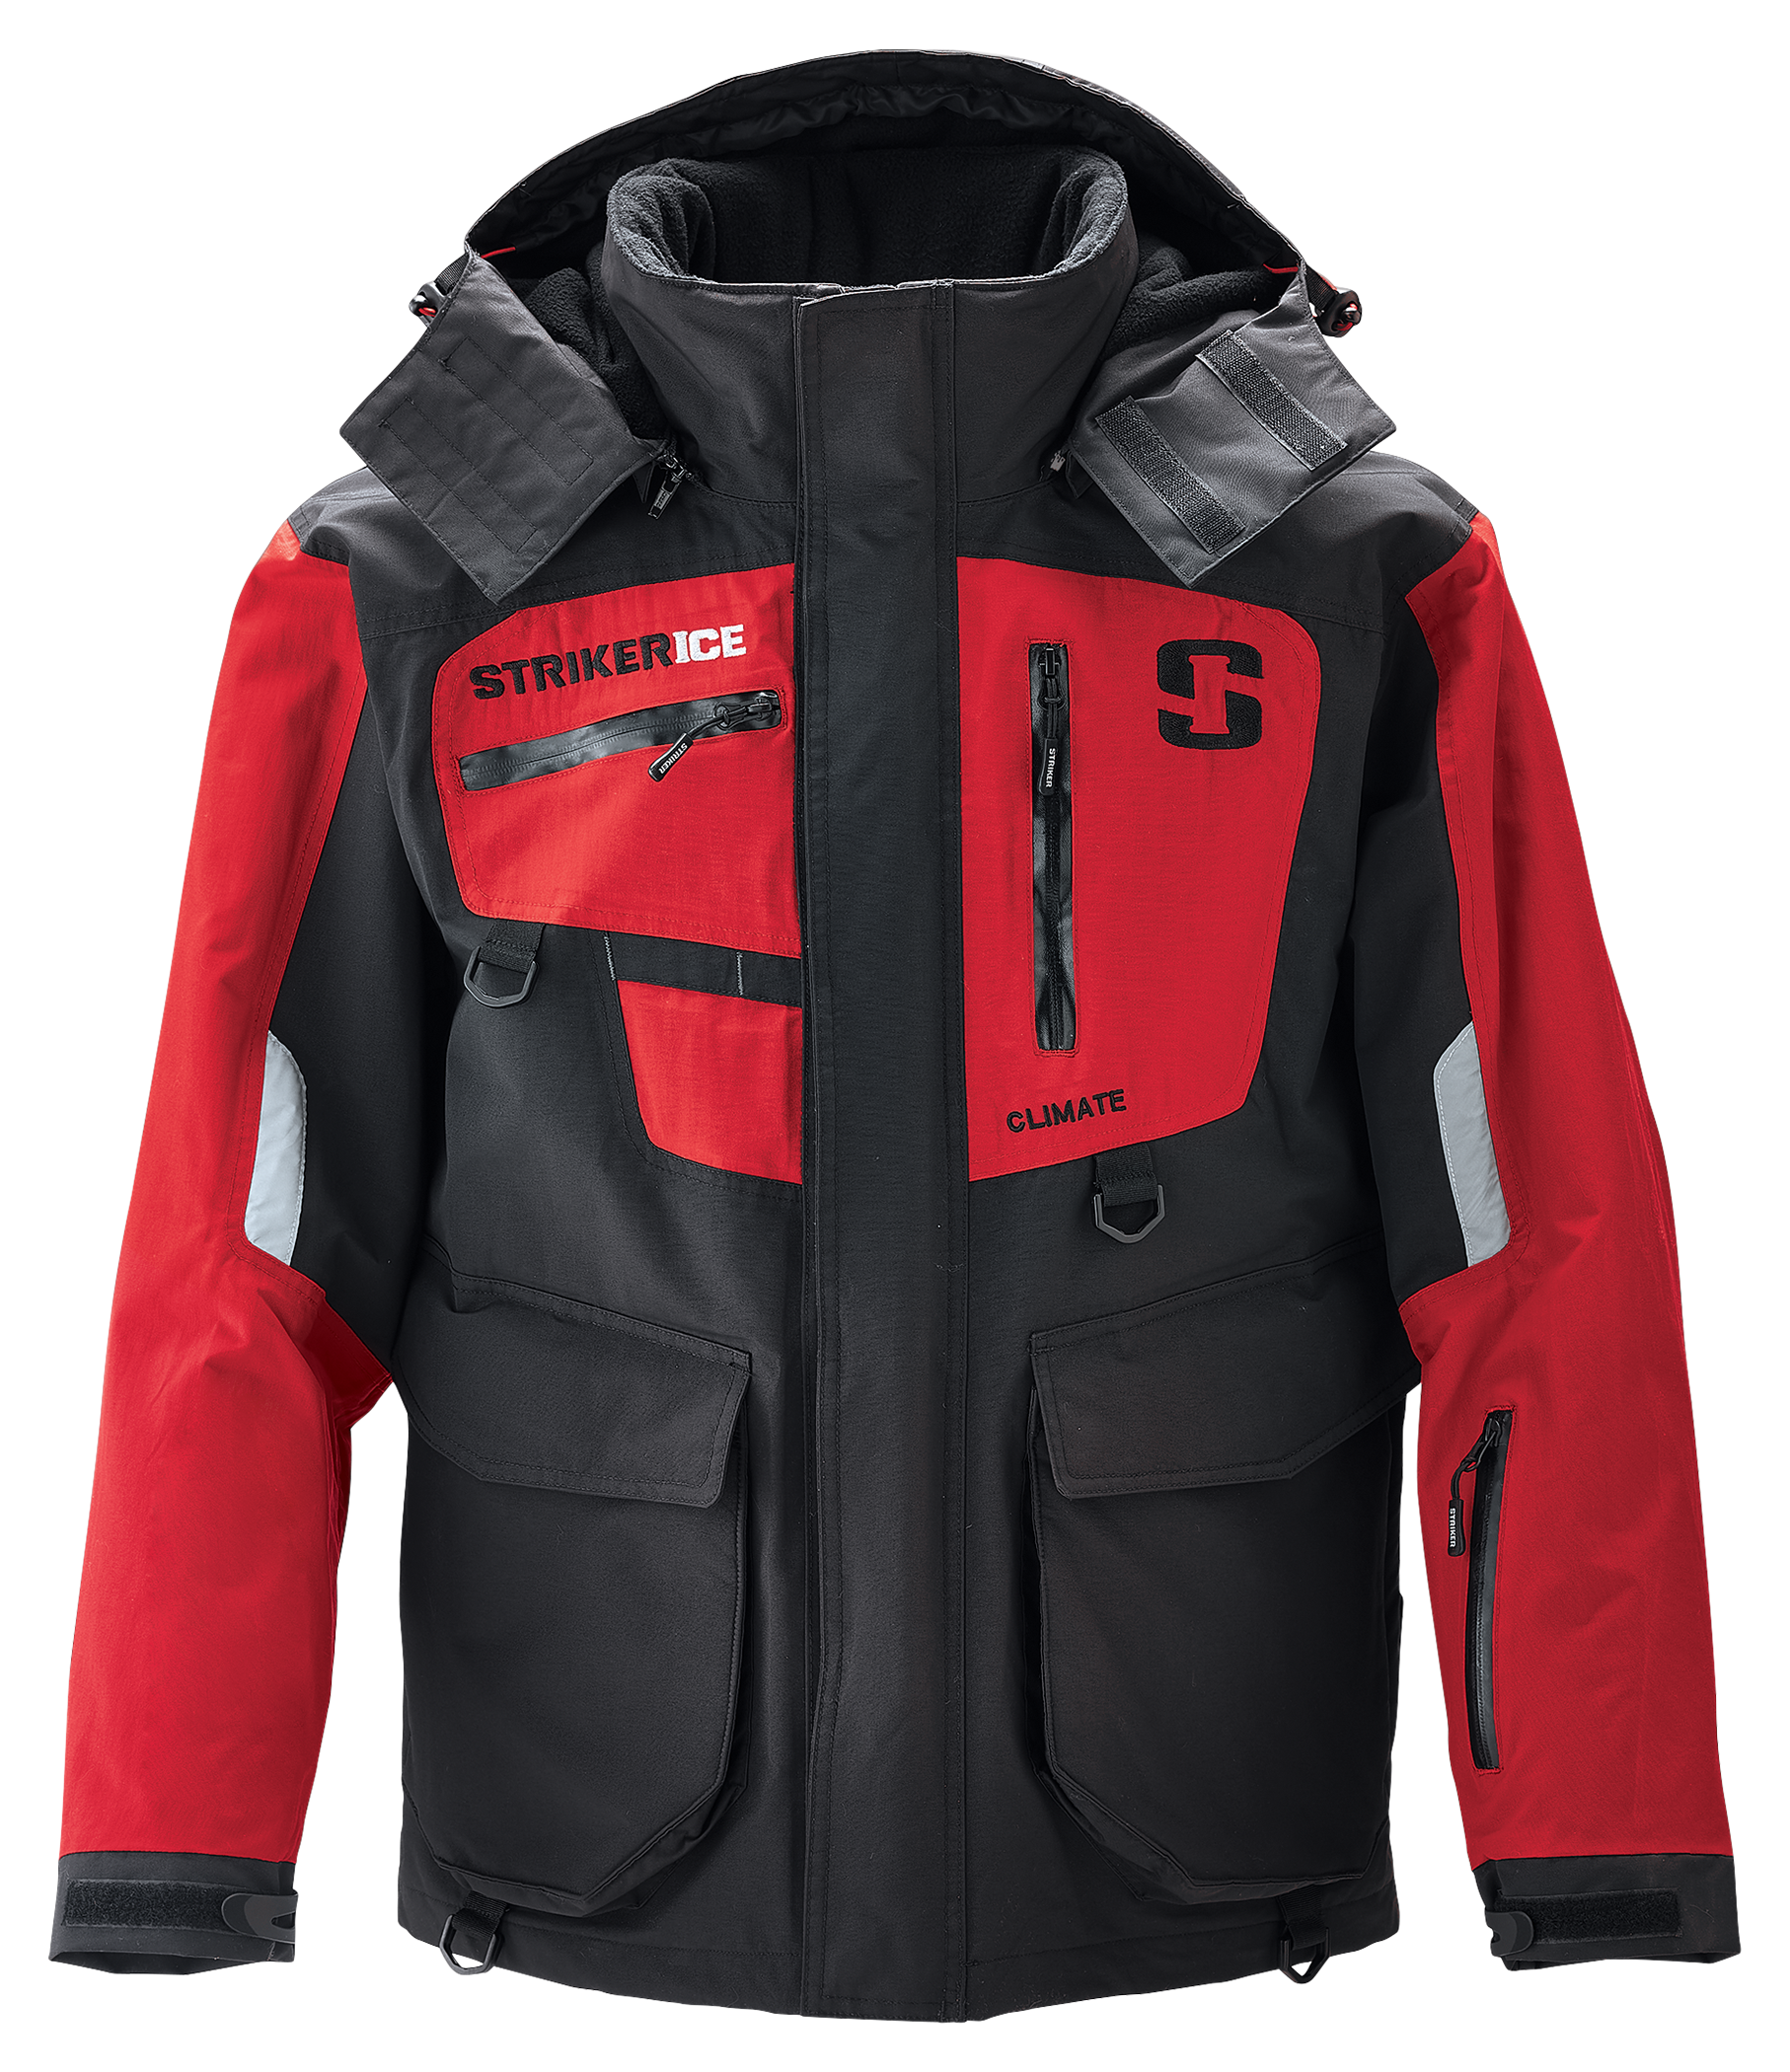 Striker Ice Climate Series Jacket for Men - Black/Red - 2XL -  StrikerICE